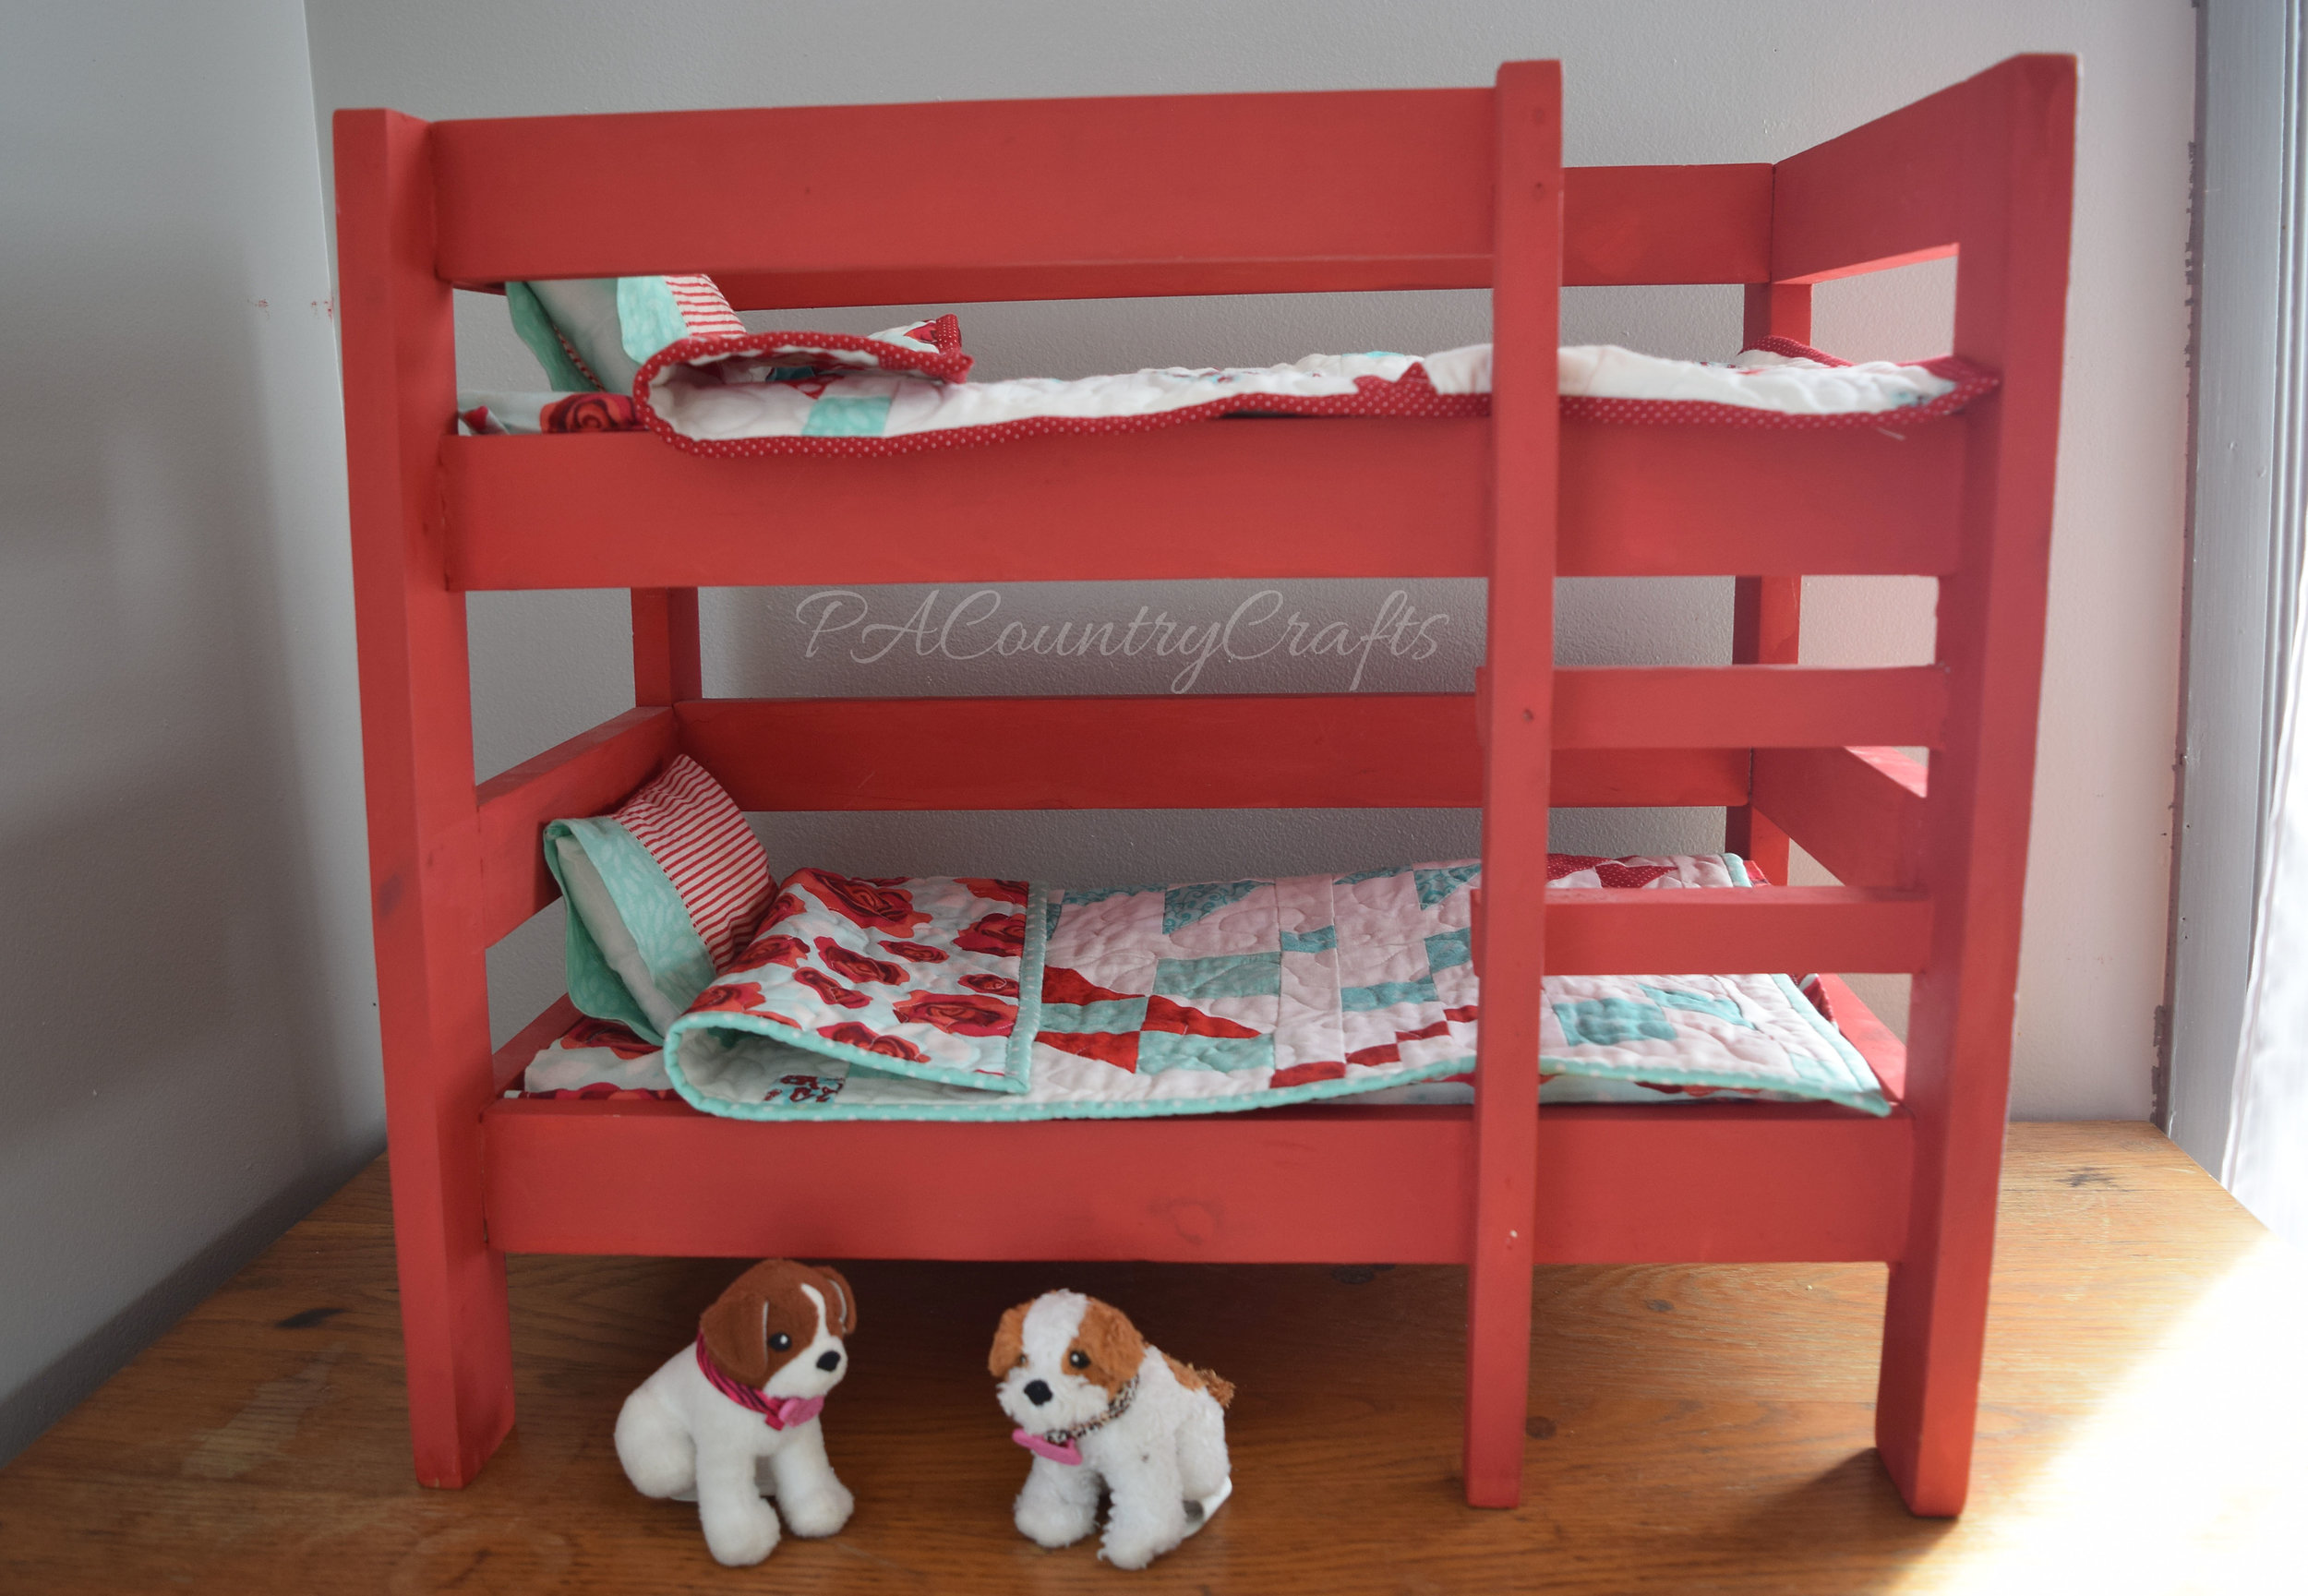 Diy Doll Bunk Beds Pacountrycrafts, Diy Doll Bunk Bed